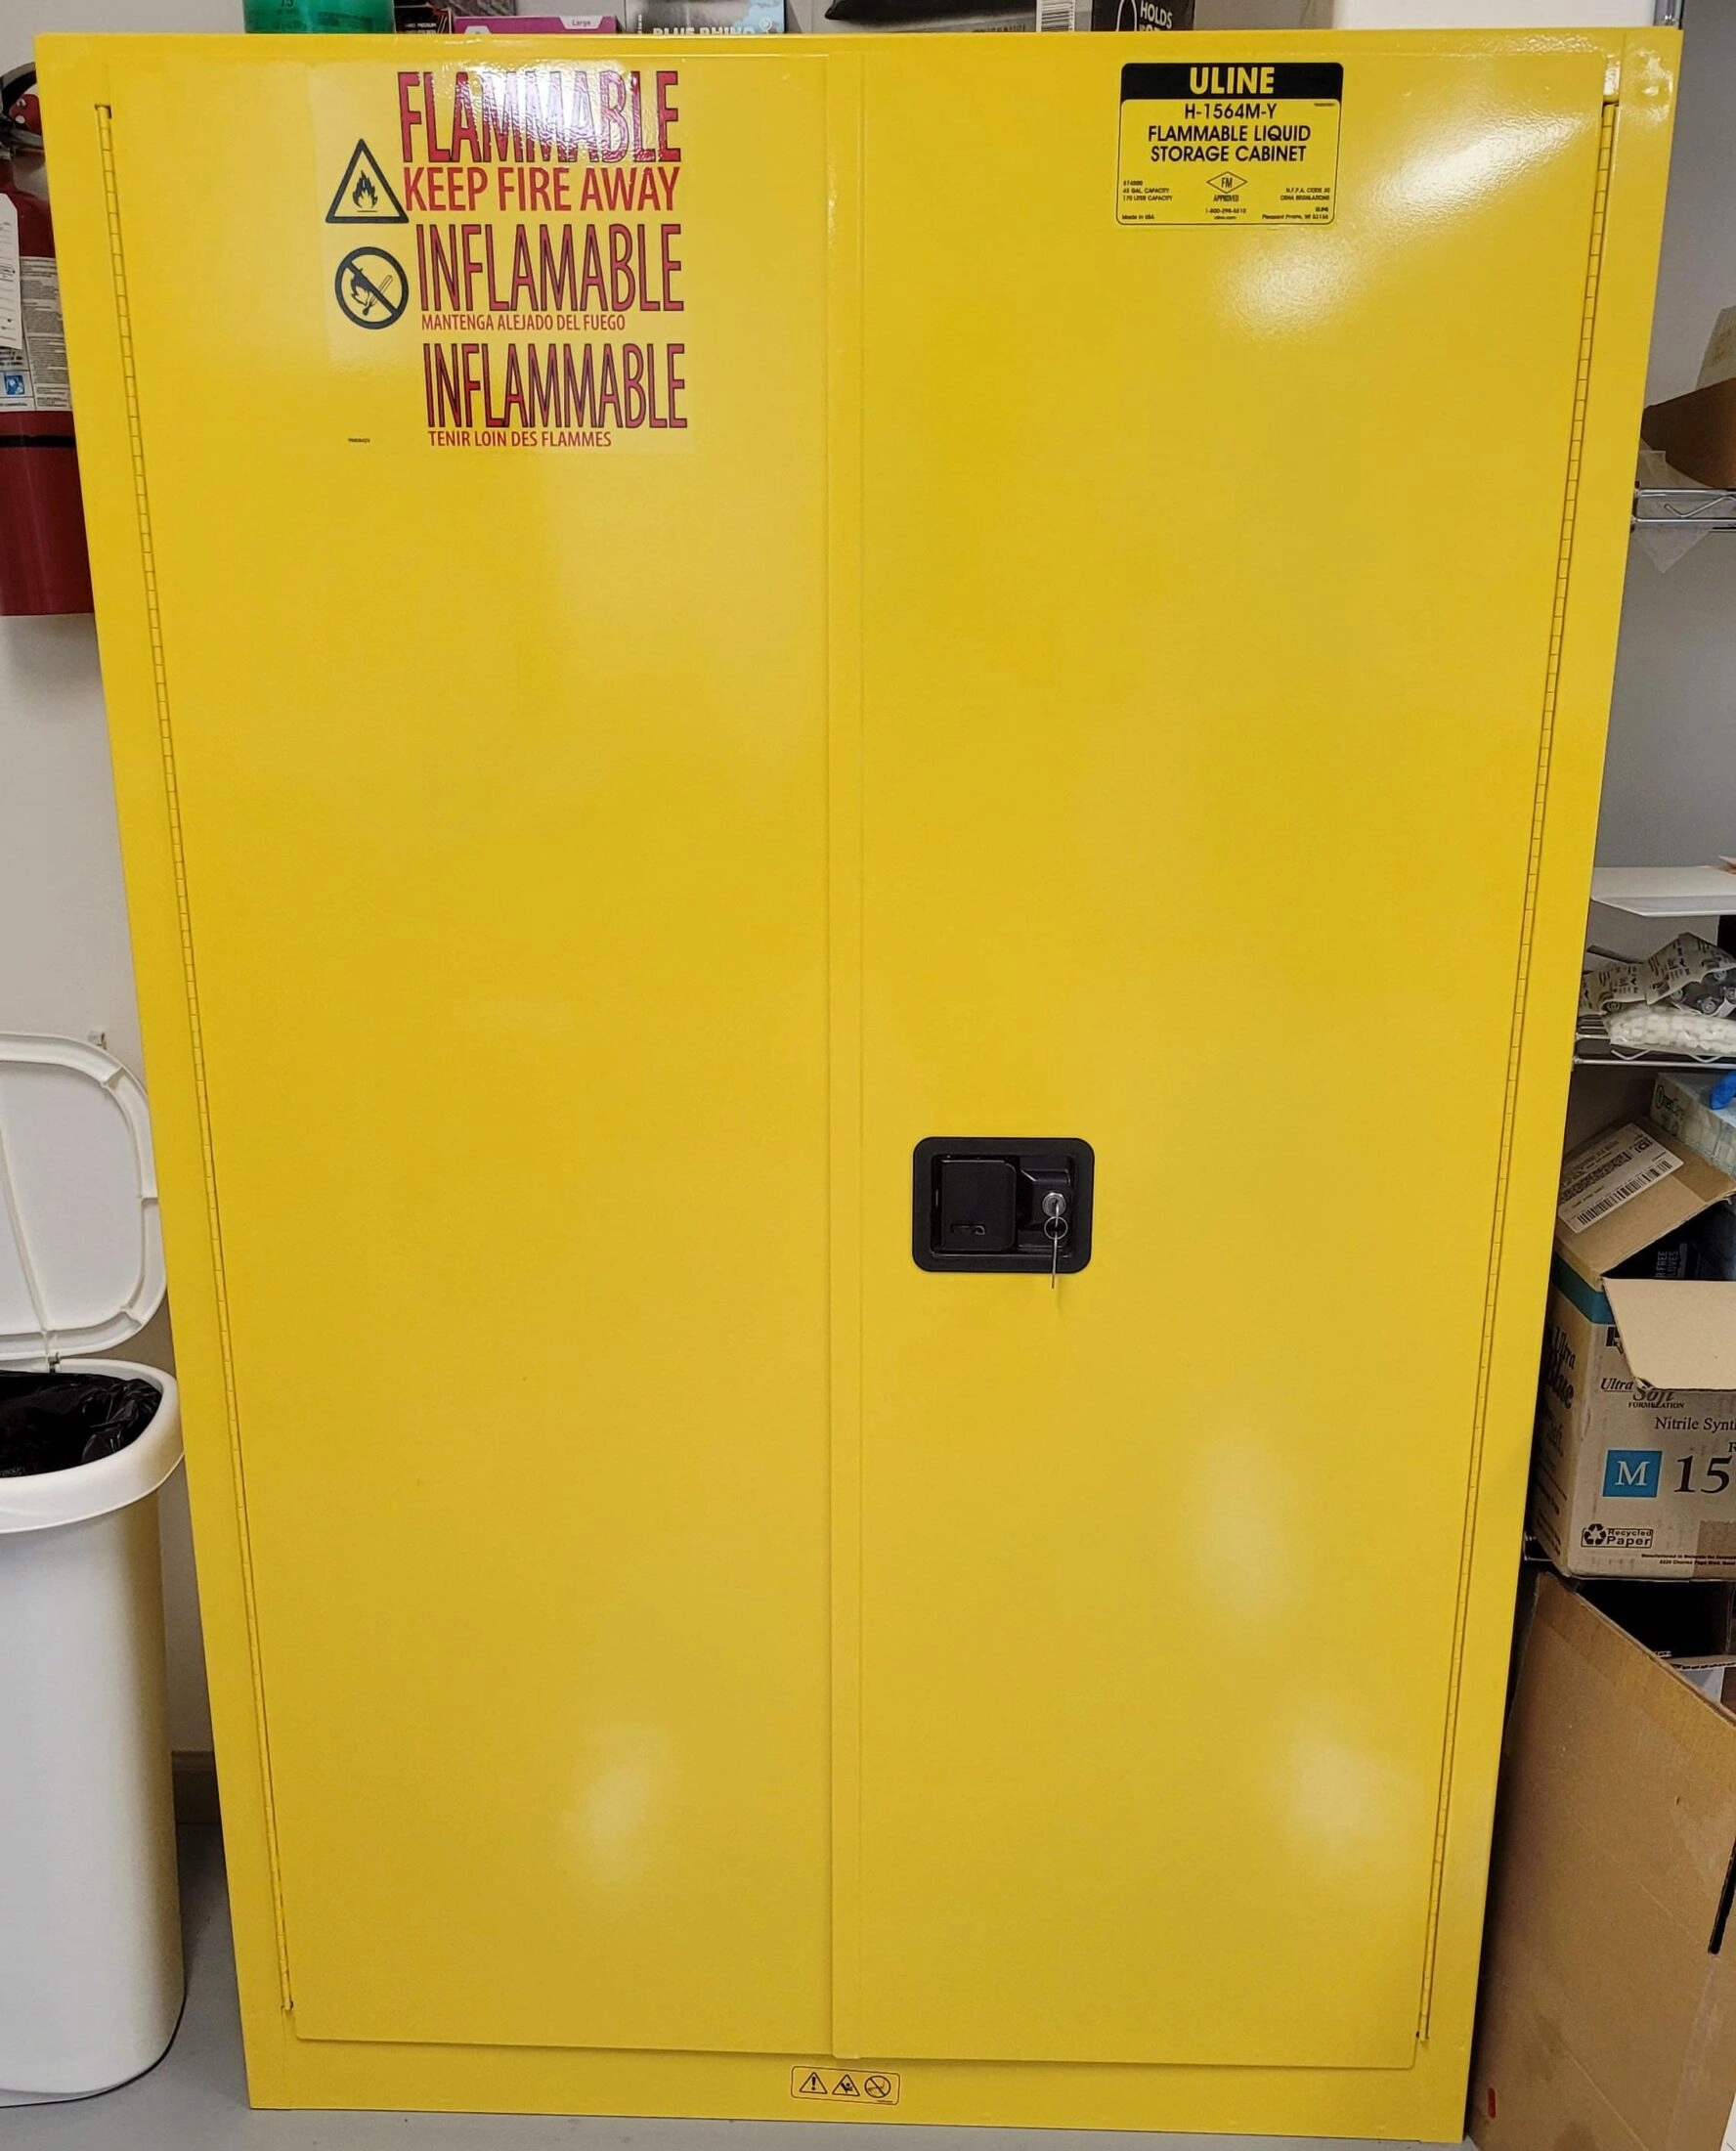 ULINE Flammable Storage Cabinet